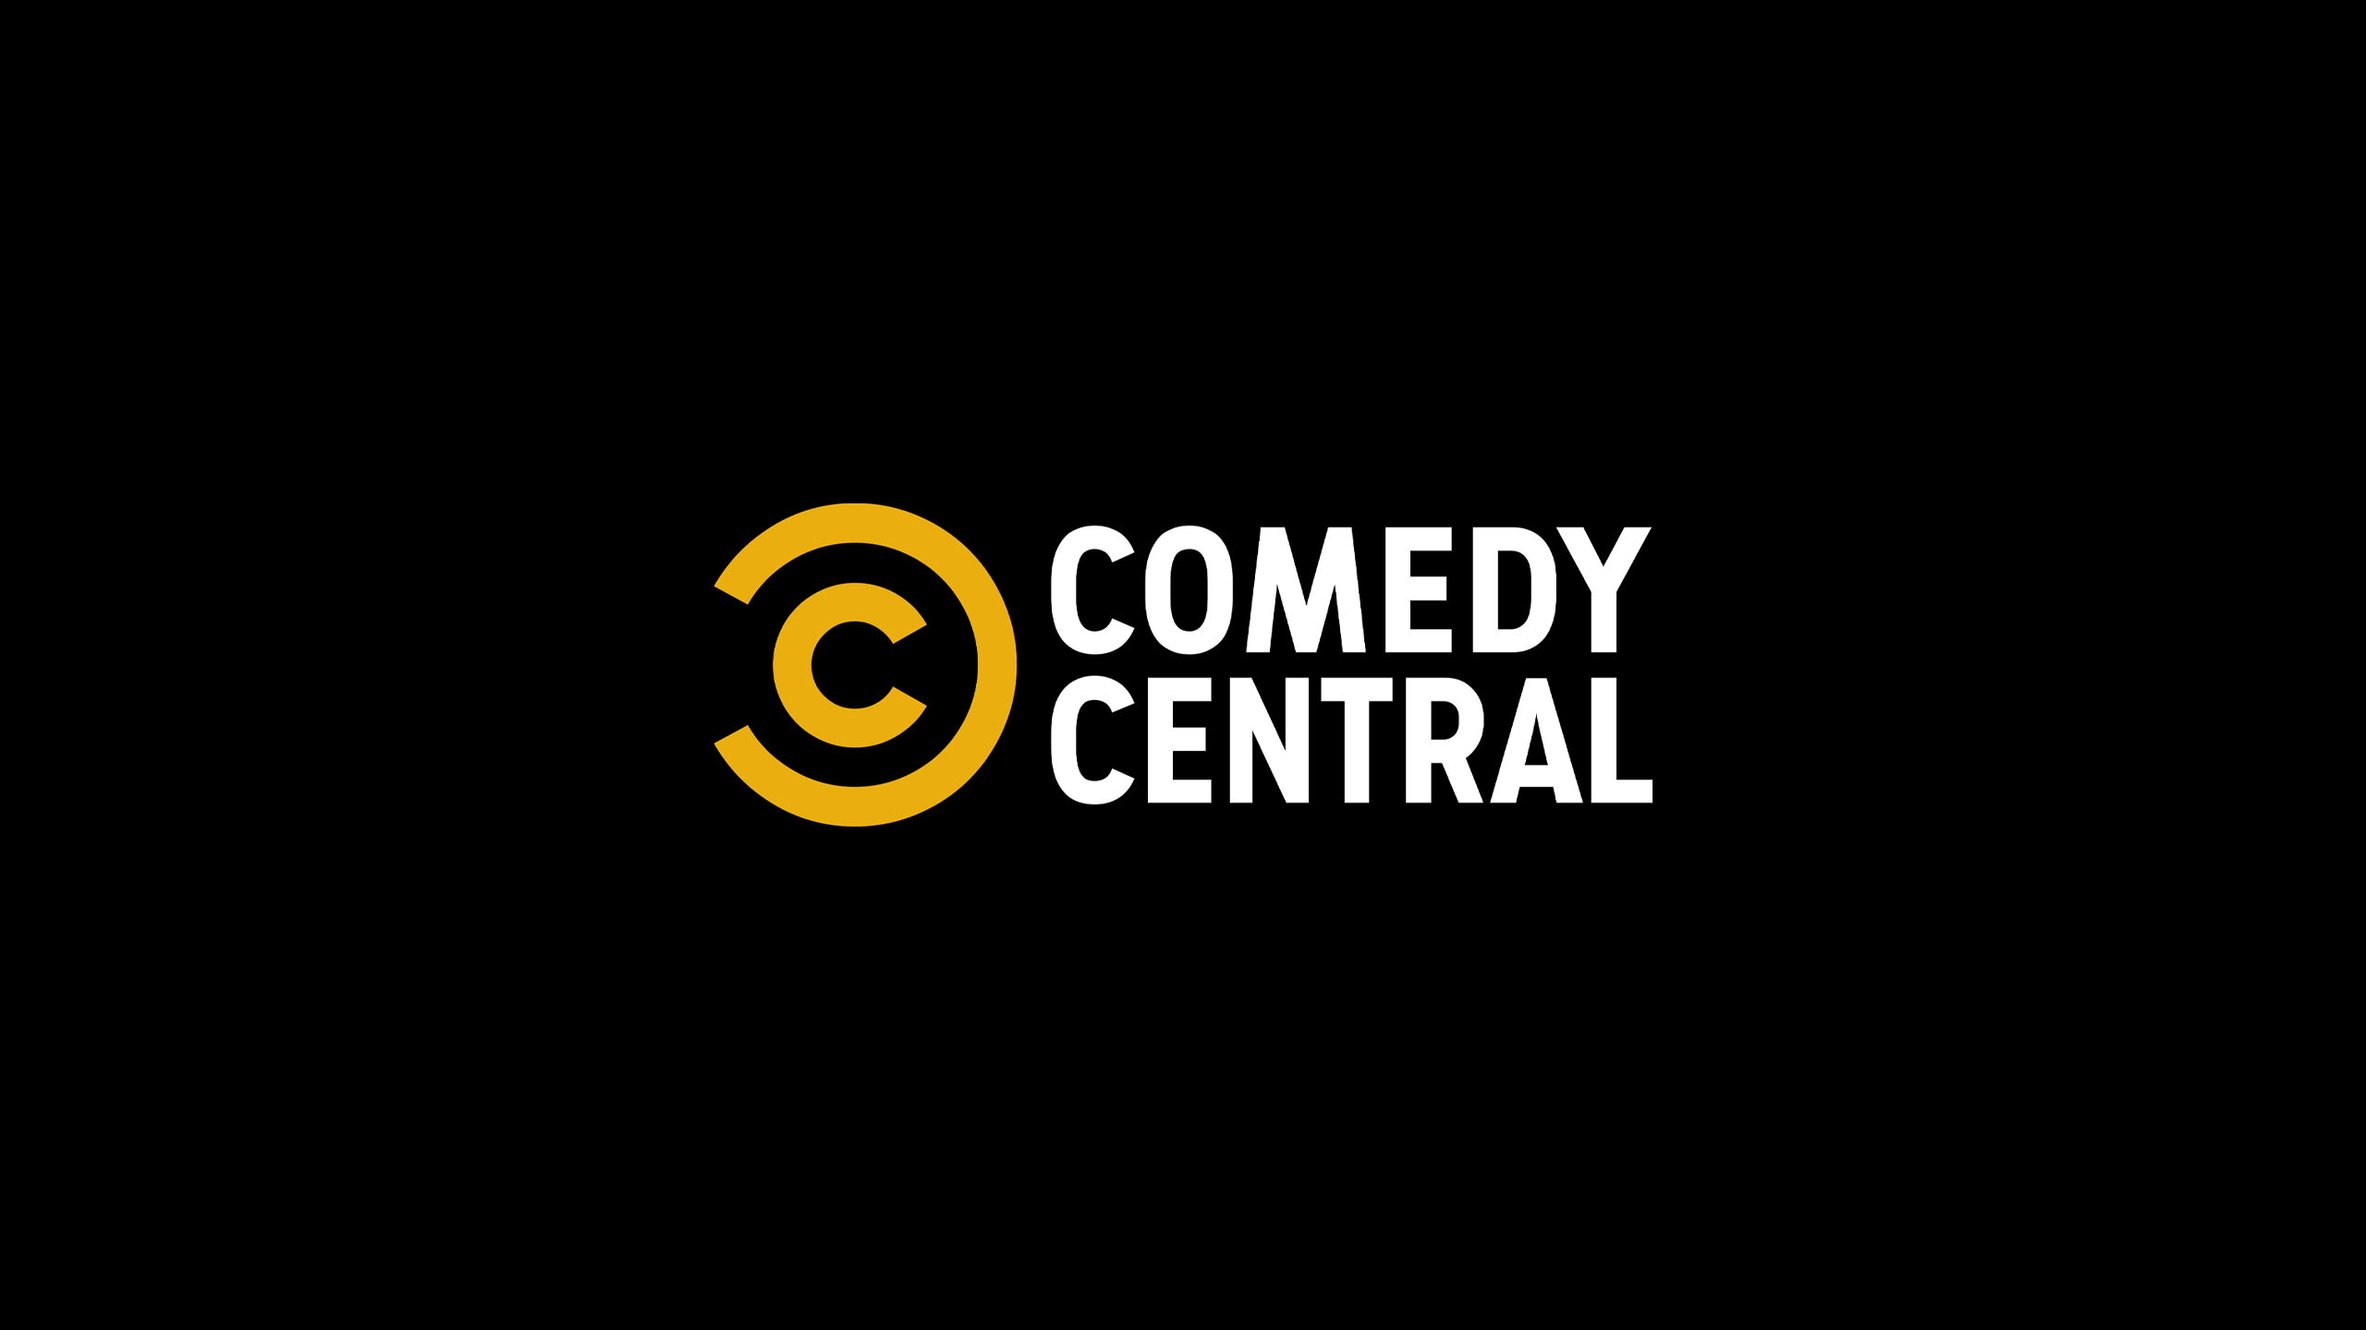 Casting Comedy Central Digital Sketch Alternatino!